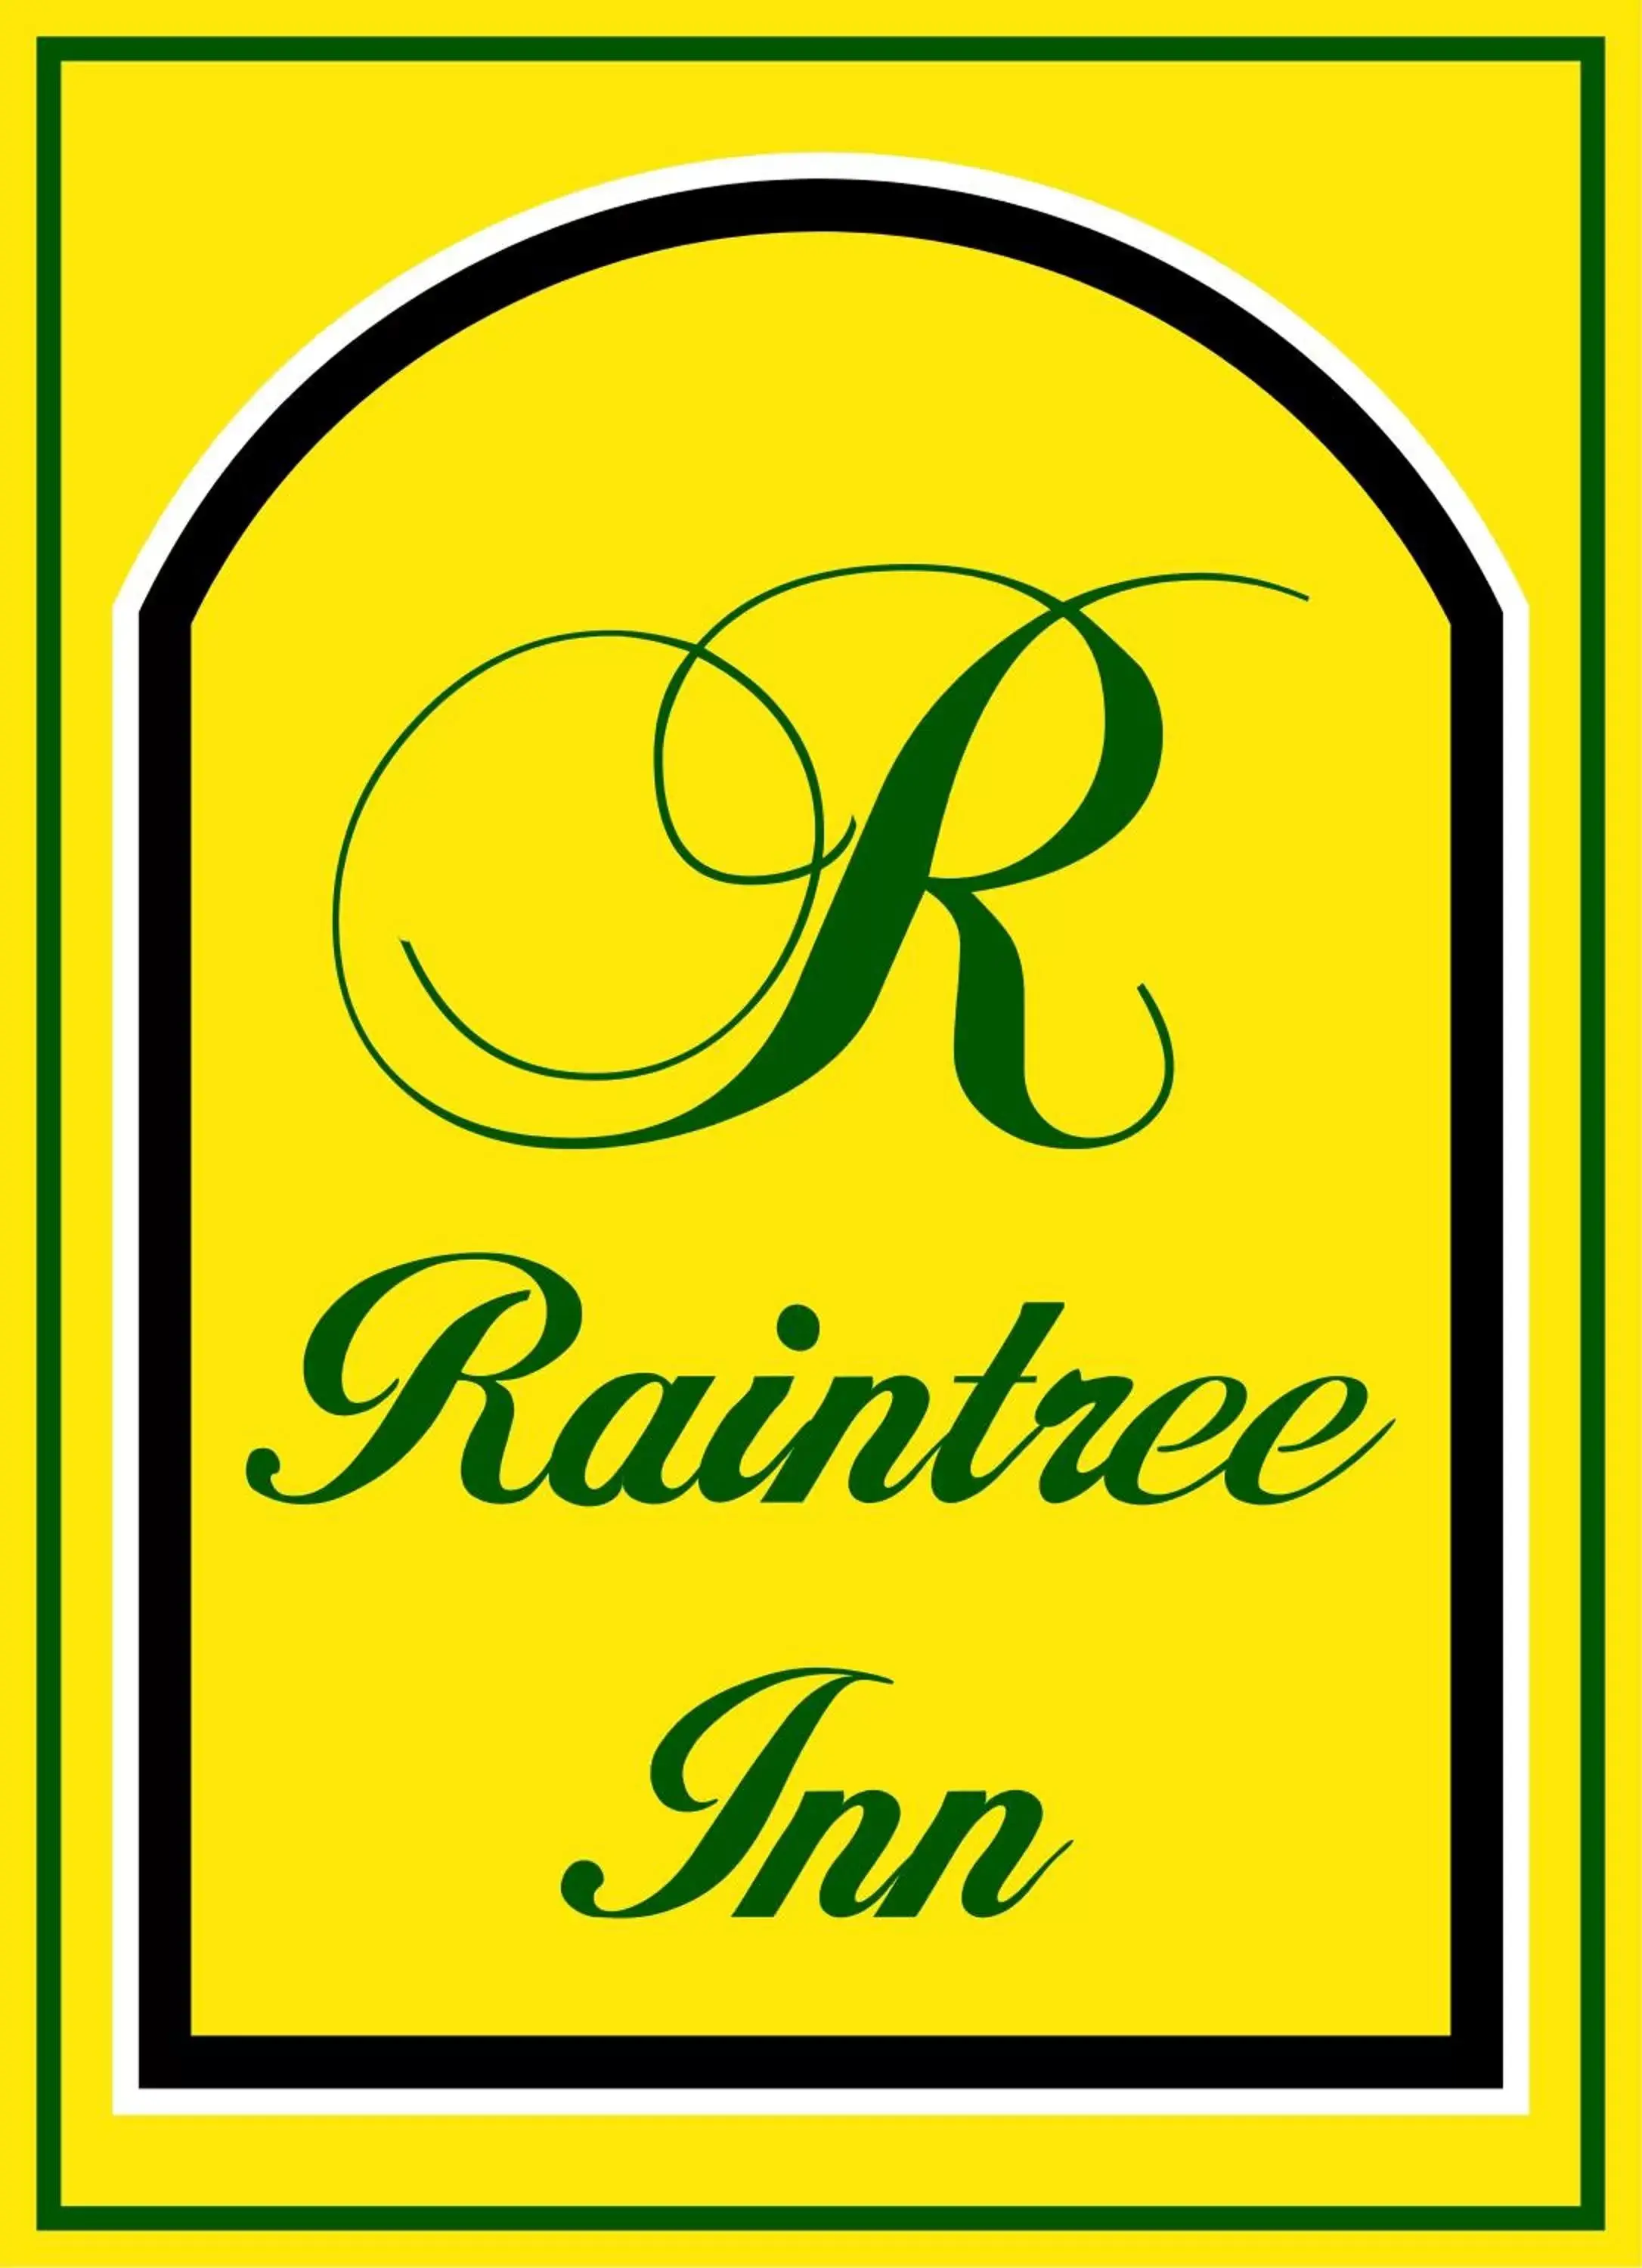 Property logo or sign in Raintree Inn